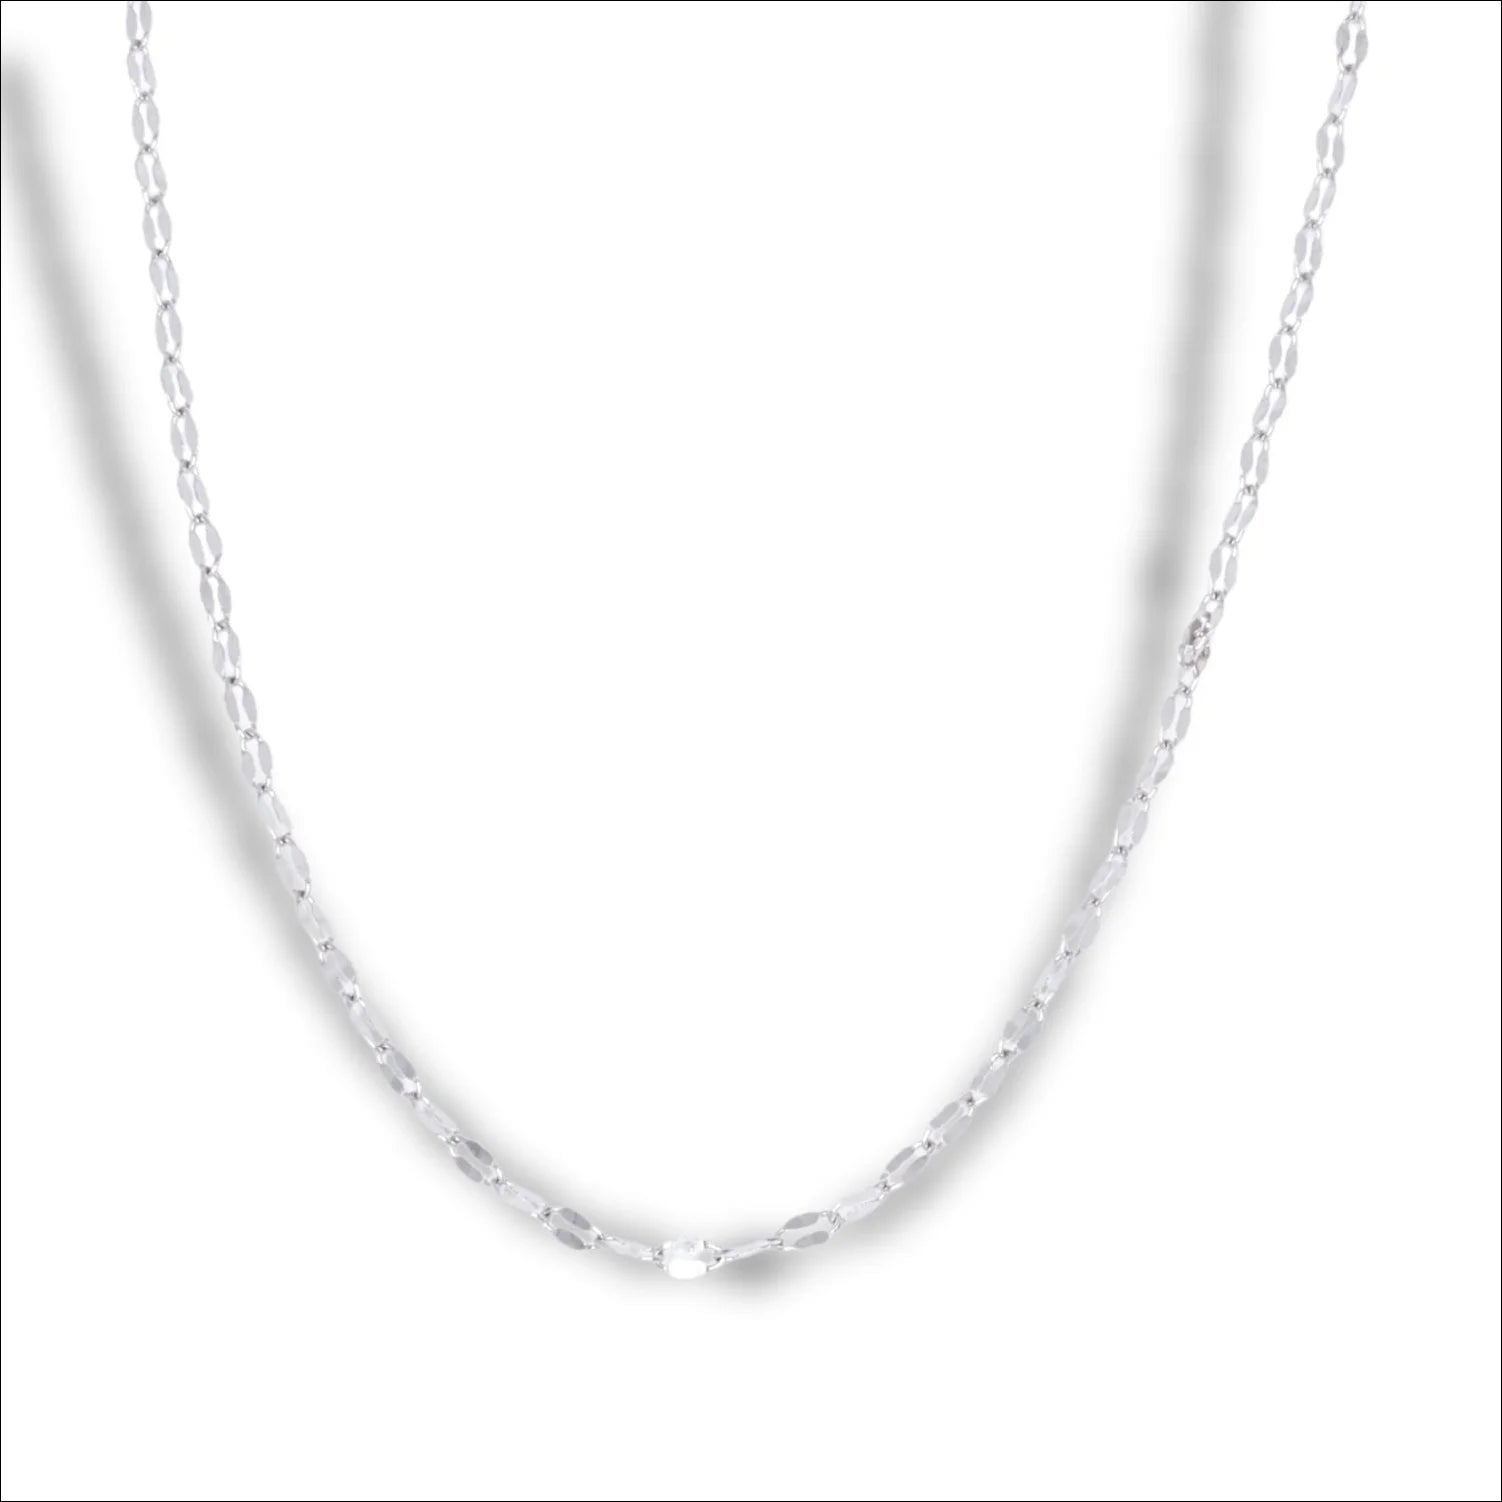 Luxury 18k white gold chain - elegant 17.5-inch style